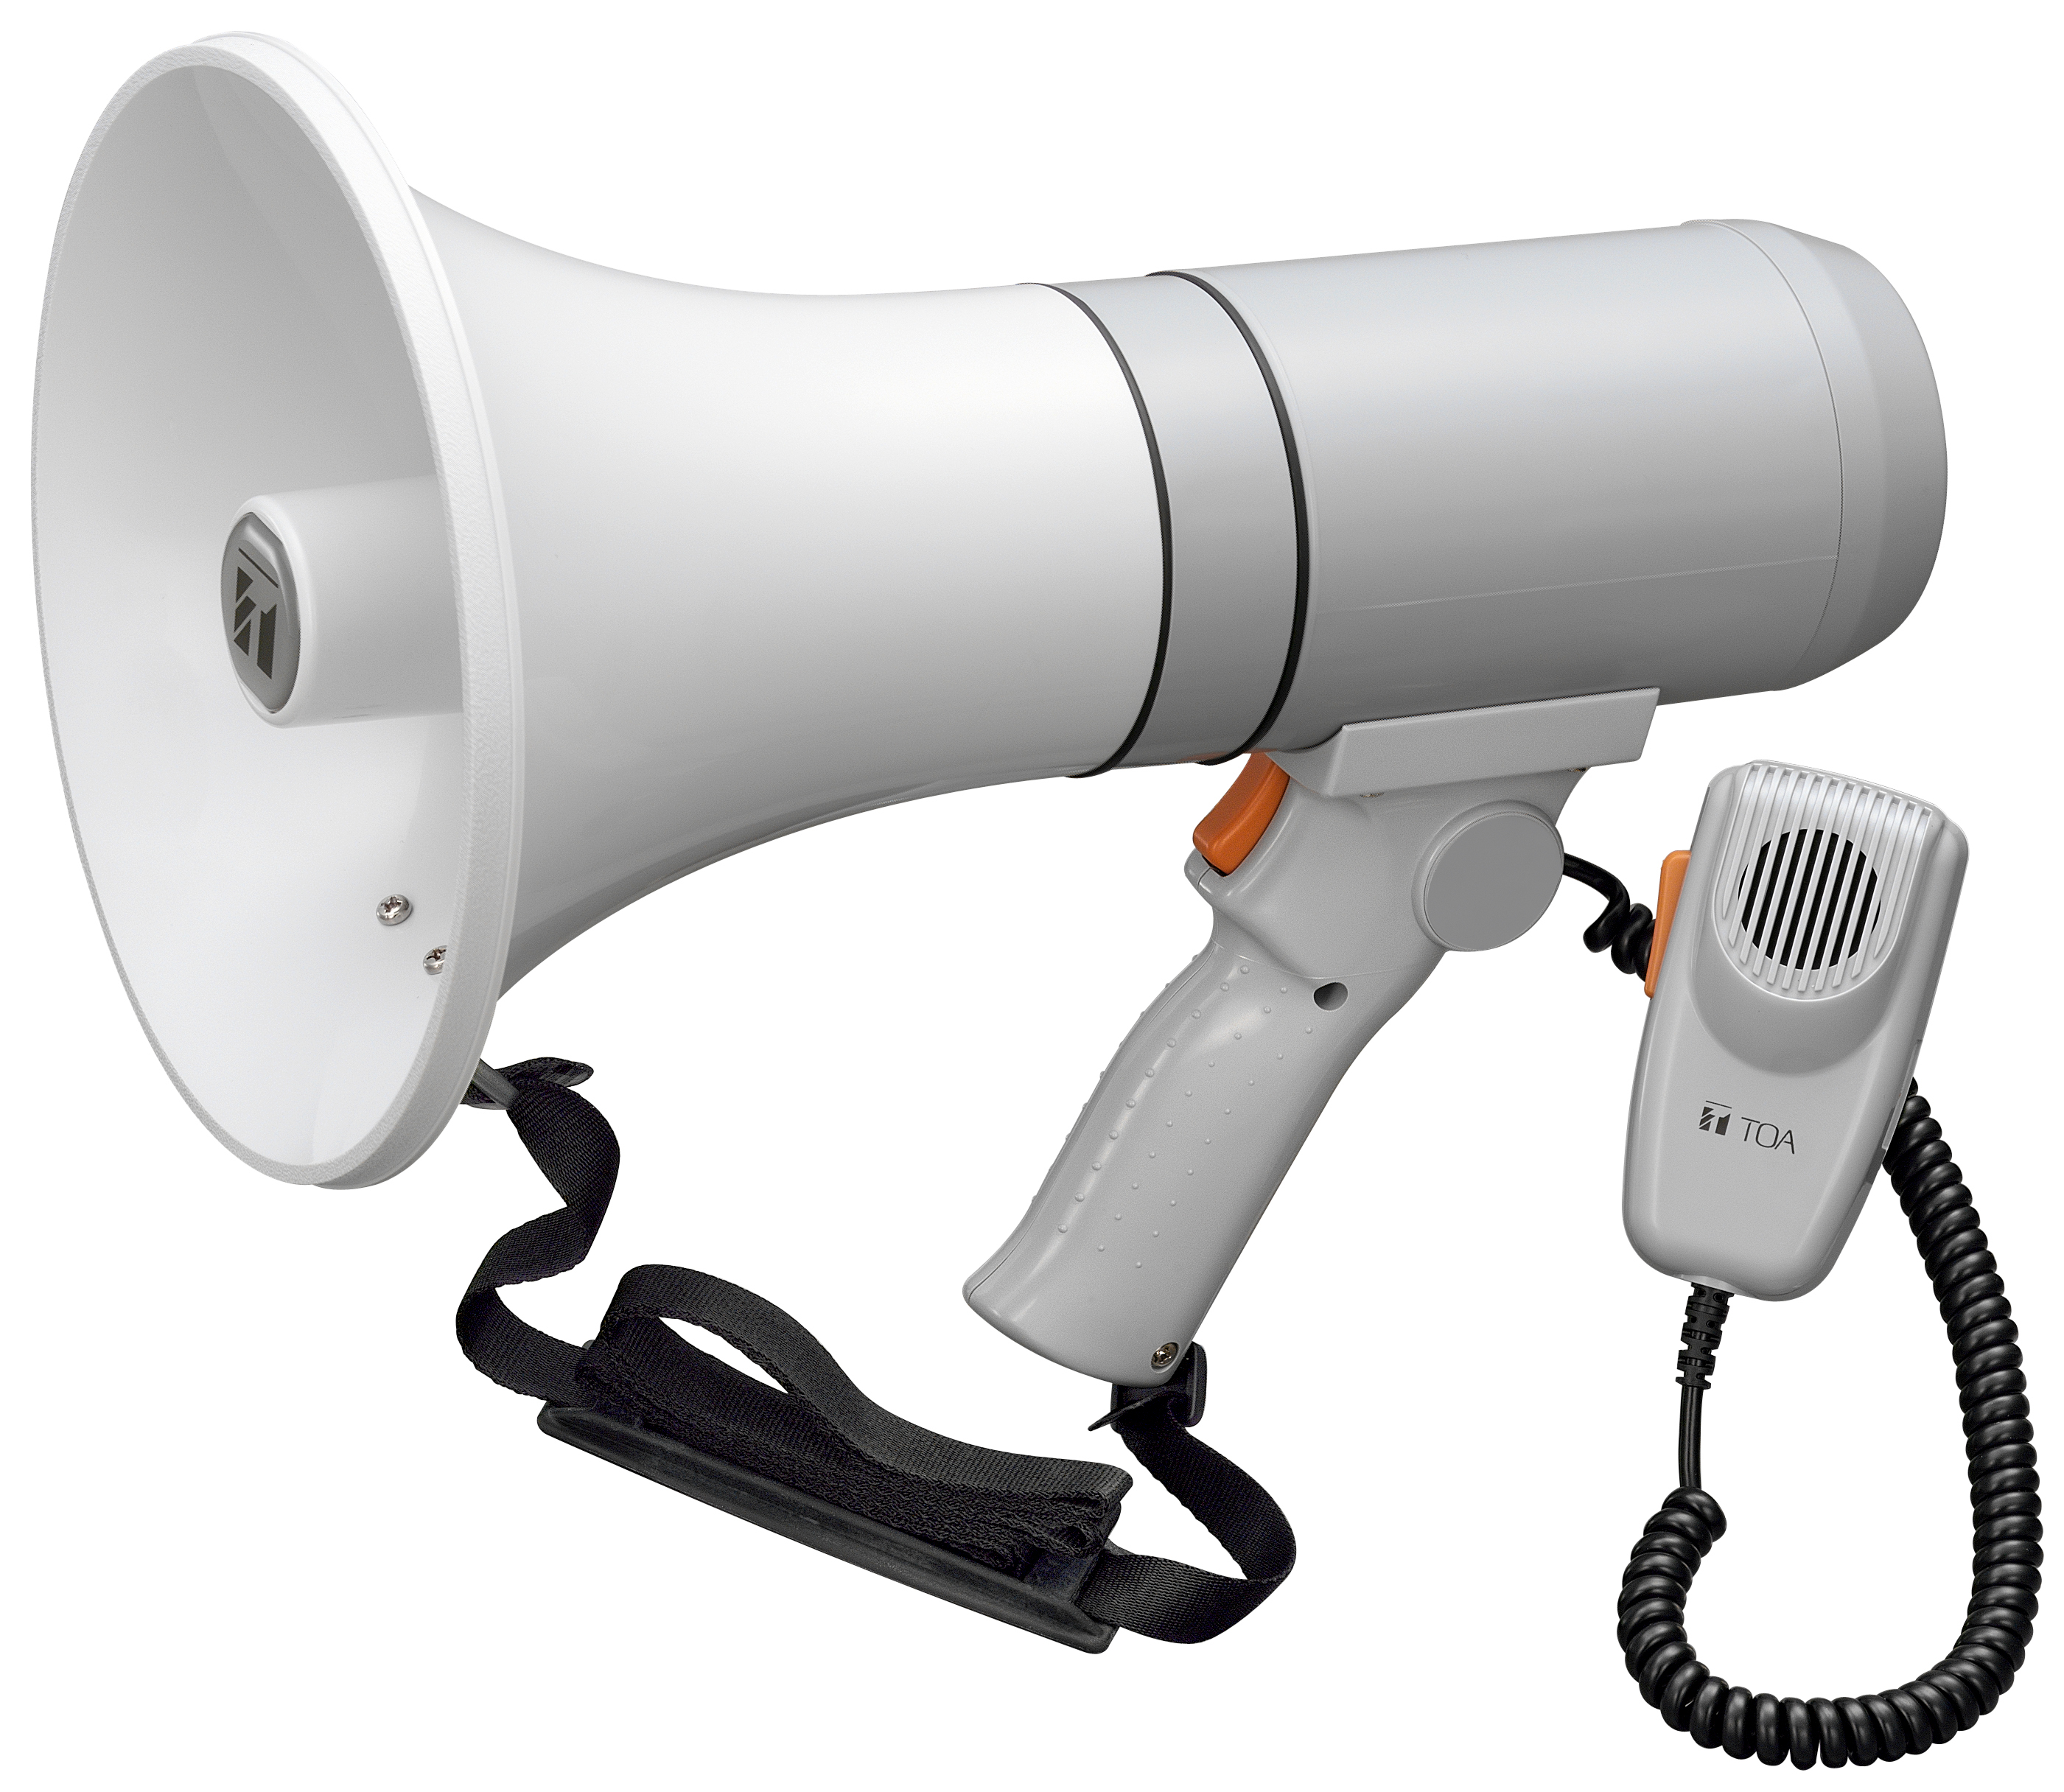 Megafon TOA ER-2230W ALU Schultermegafon mit abnehmbares Mikrofon und Sirene